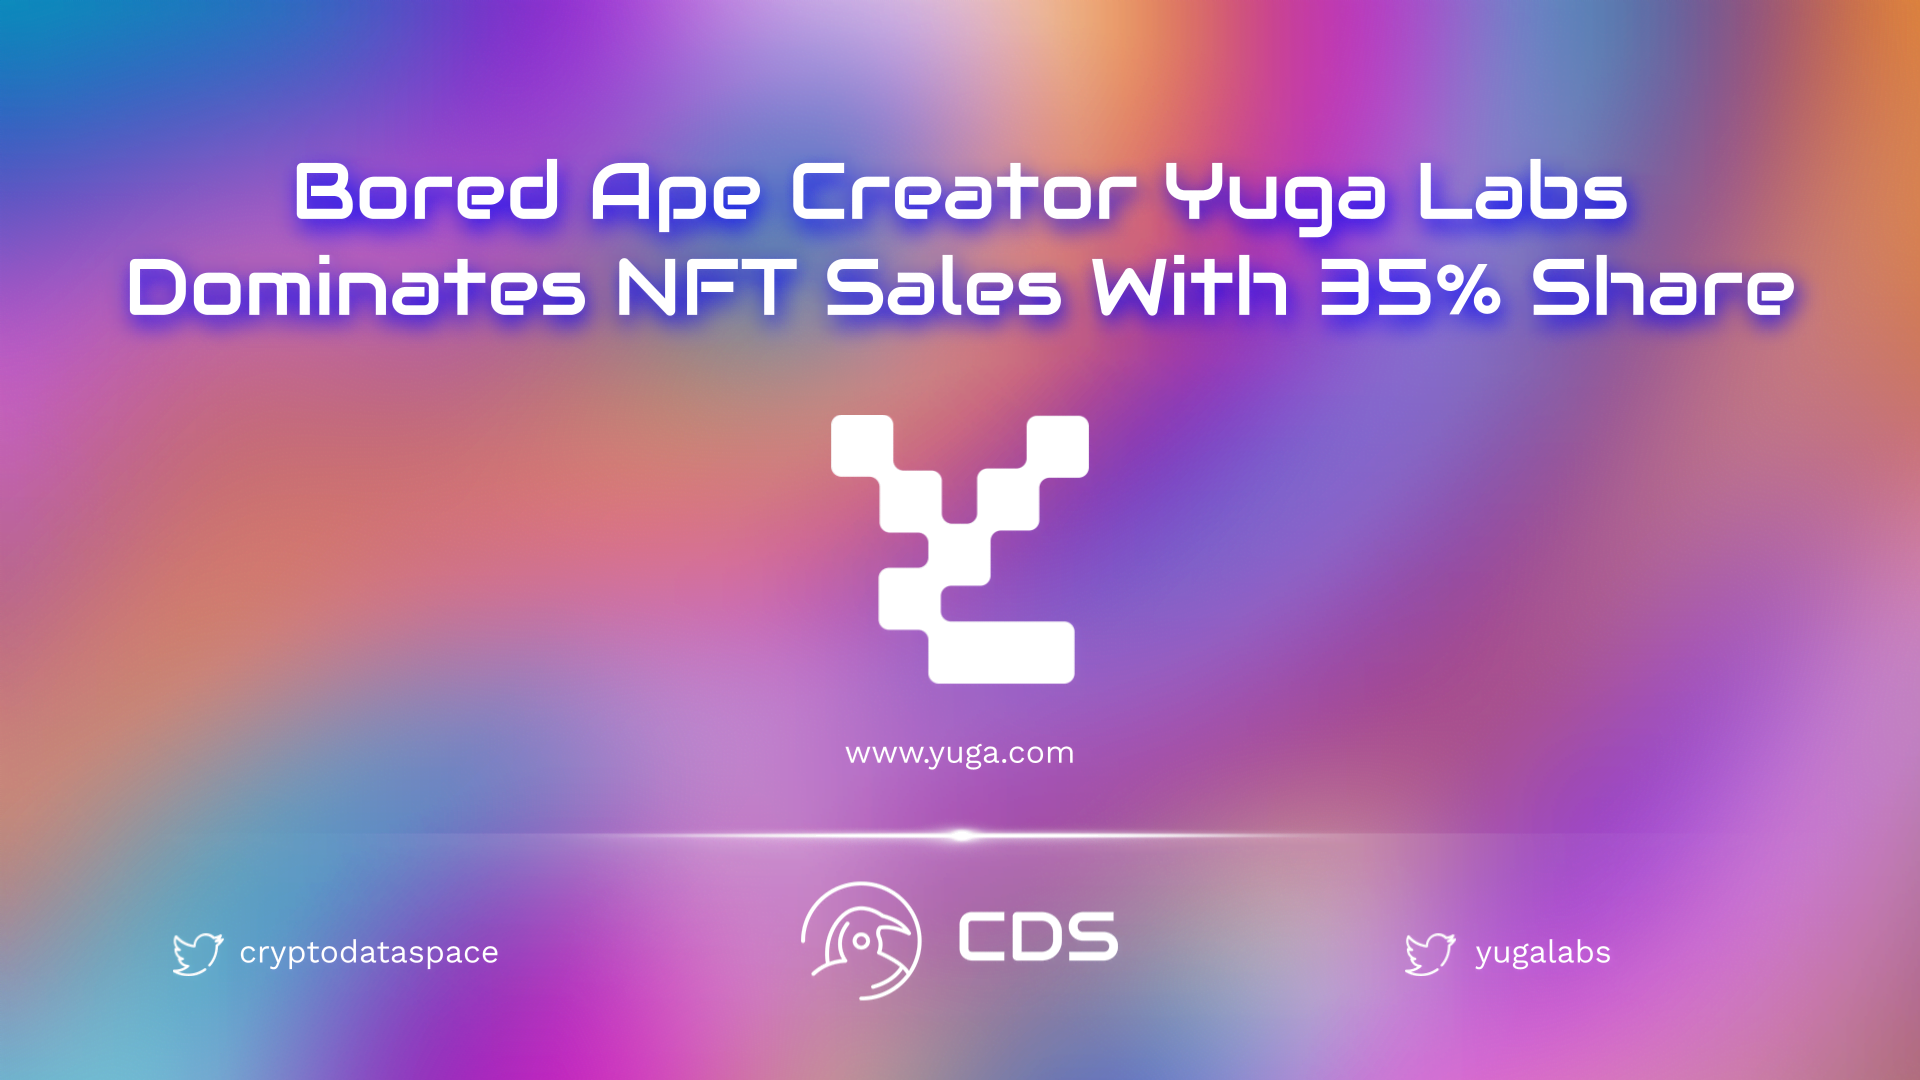 Bored Ape Creator Yuga Labs Dominates NFT Sales With 35% Share